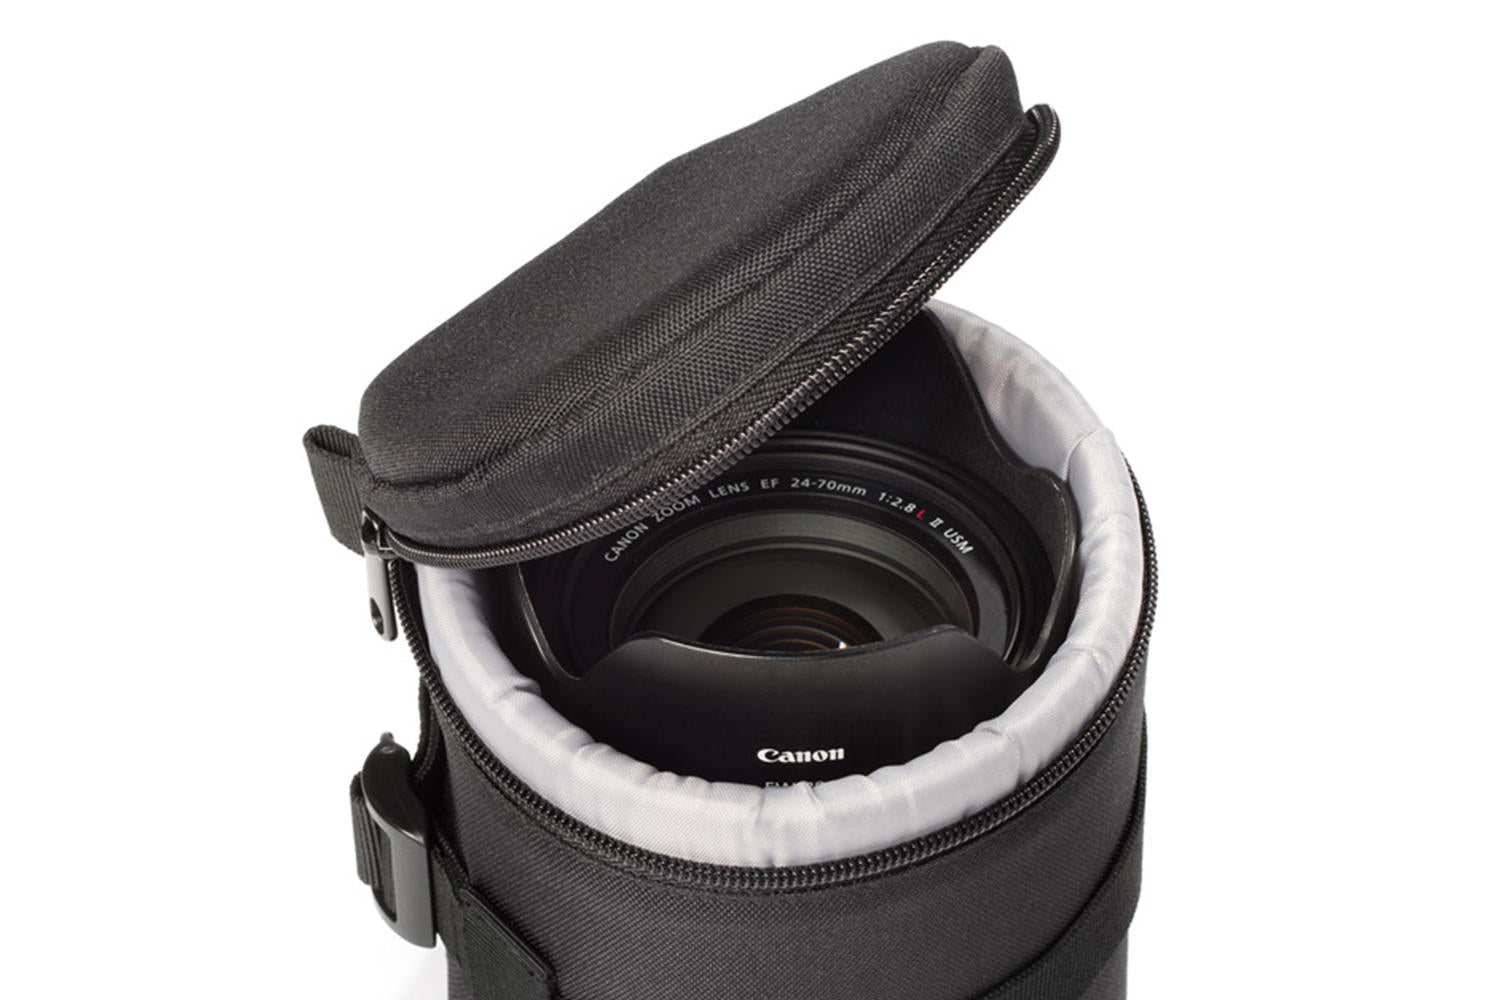 easyCover Lens Bag Size 80x95mm